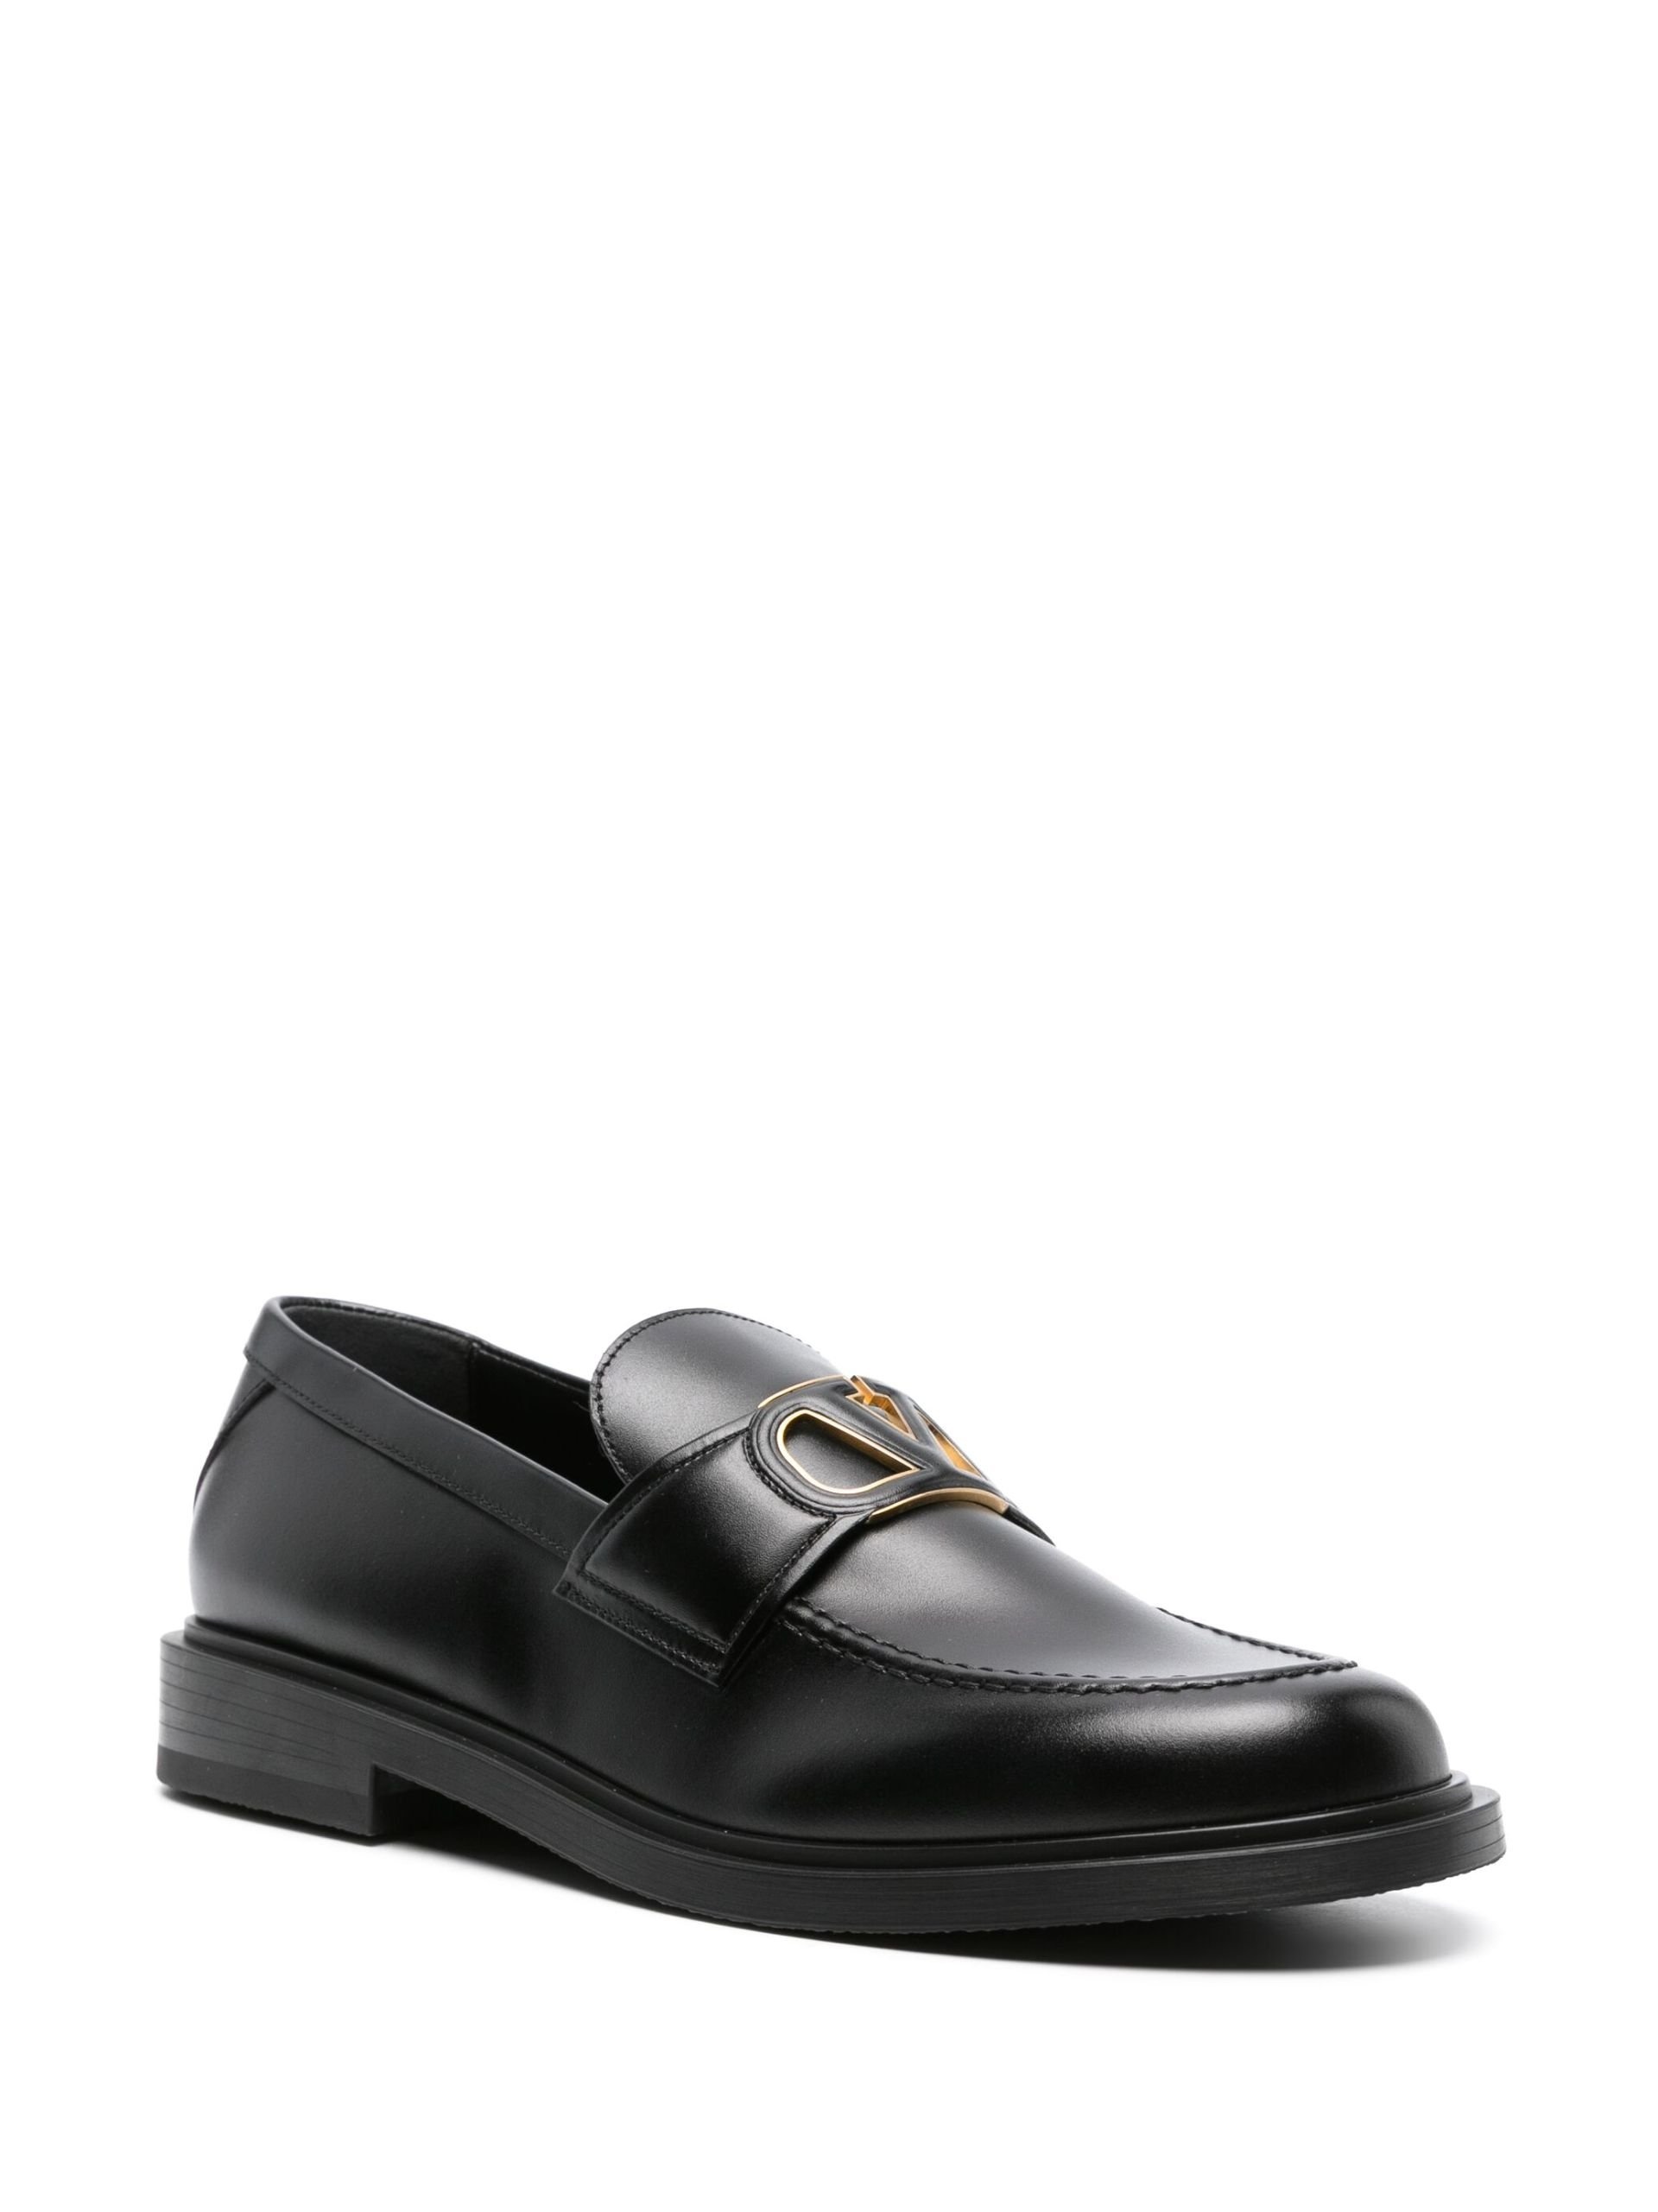 Black VLogo Leather Loafers - 2